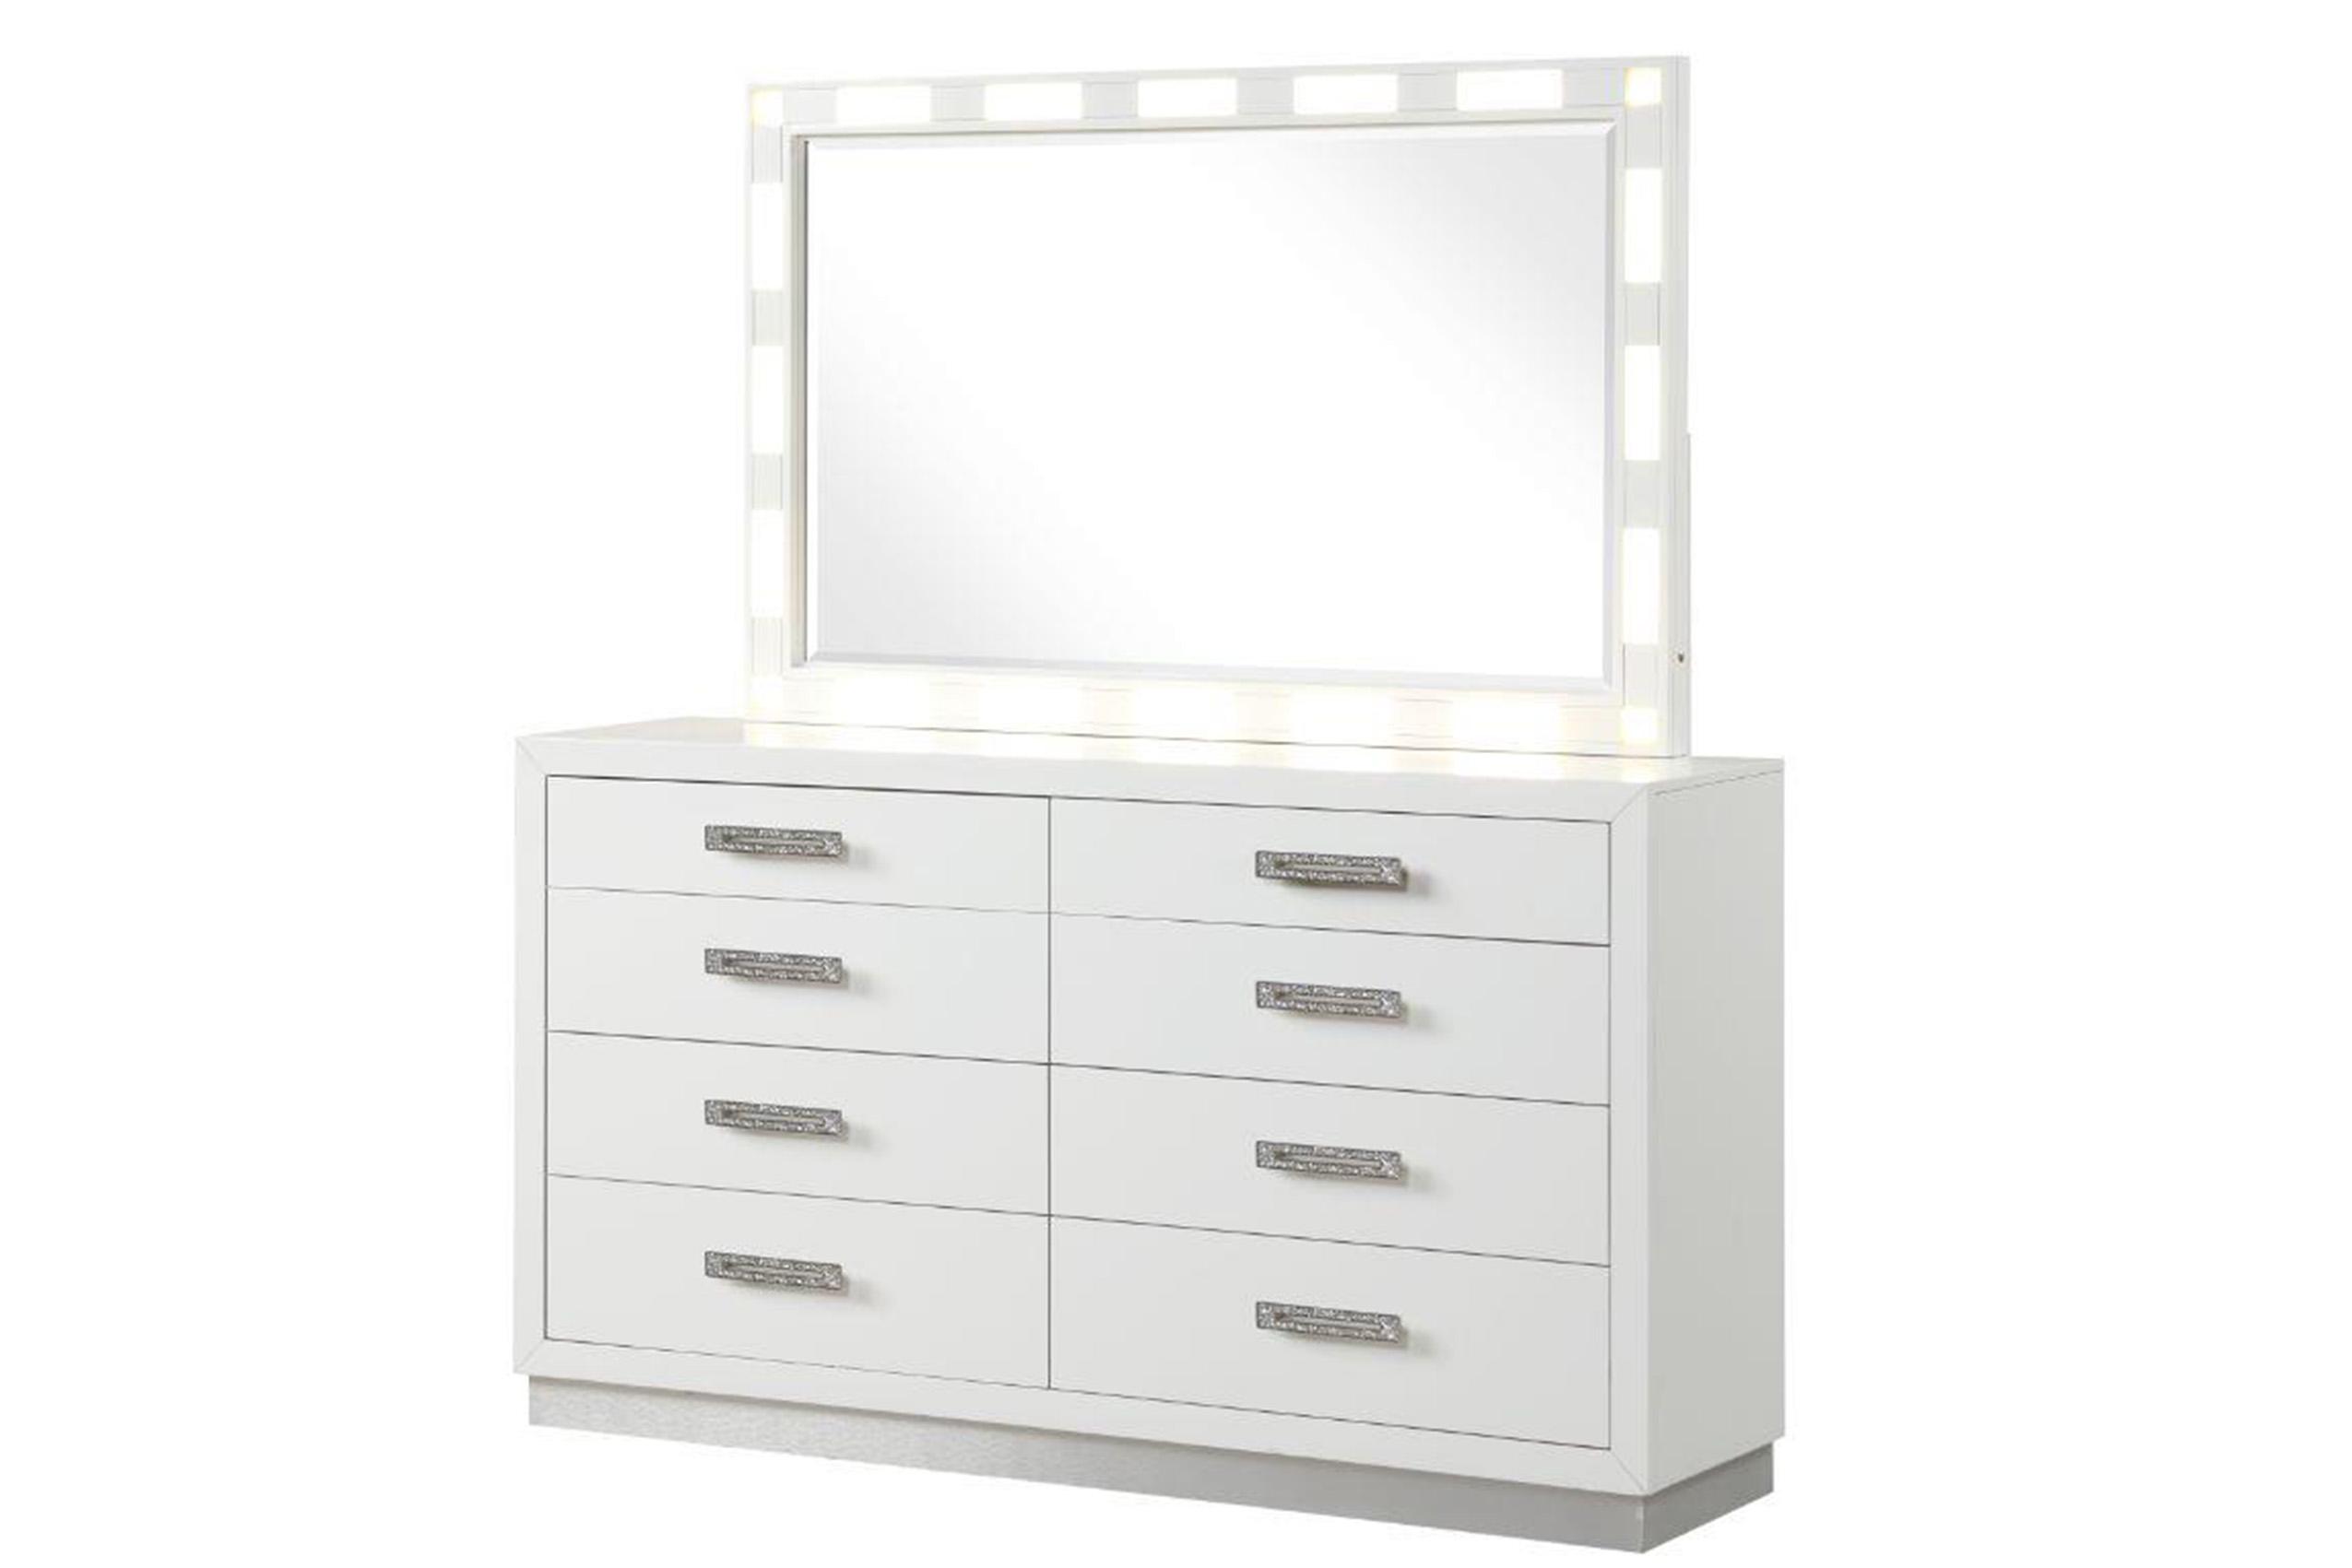 Galaxy Home Furniture COCO-DR+MR-Set Dresser With Mirror